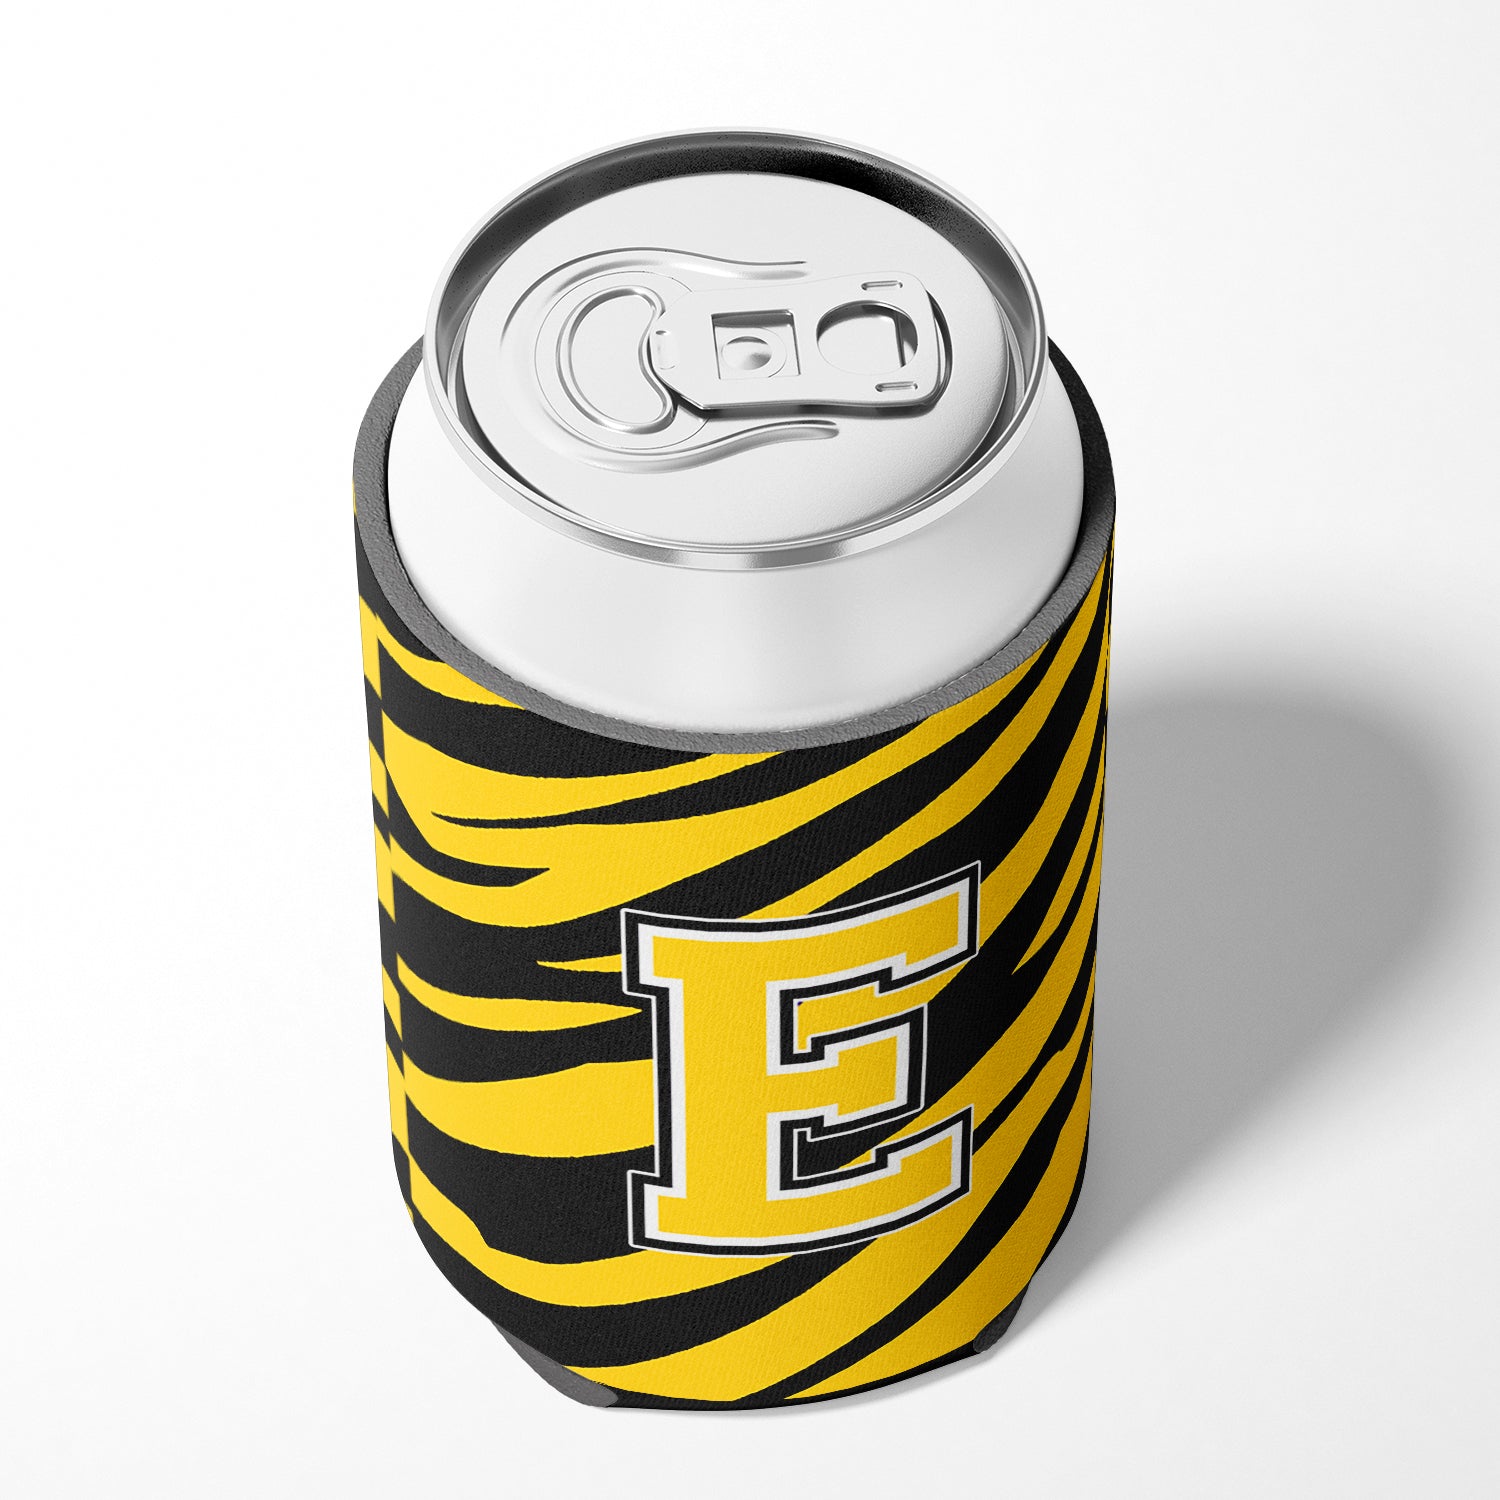 Lettre E monogramme initial - Tiger Stripe - Black Gold Can Beverage Insulator Hugger